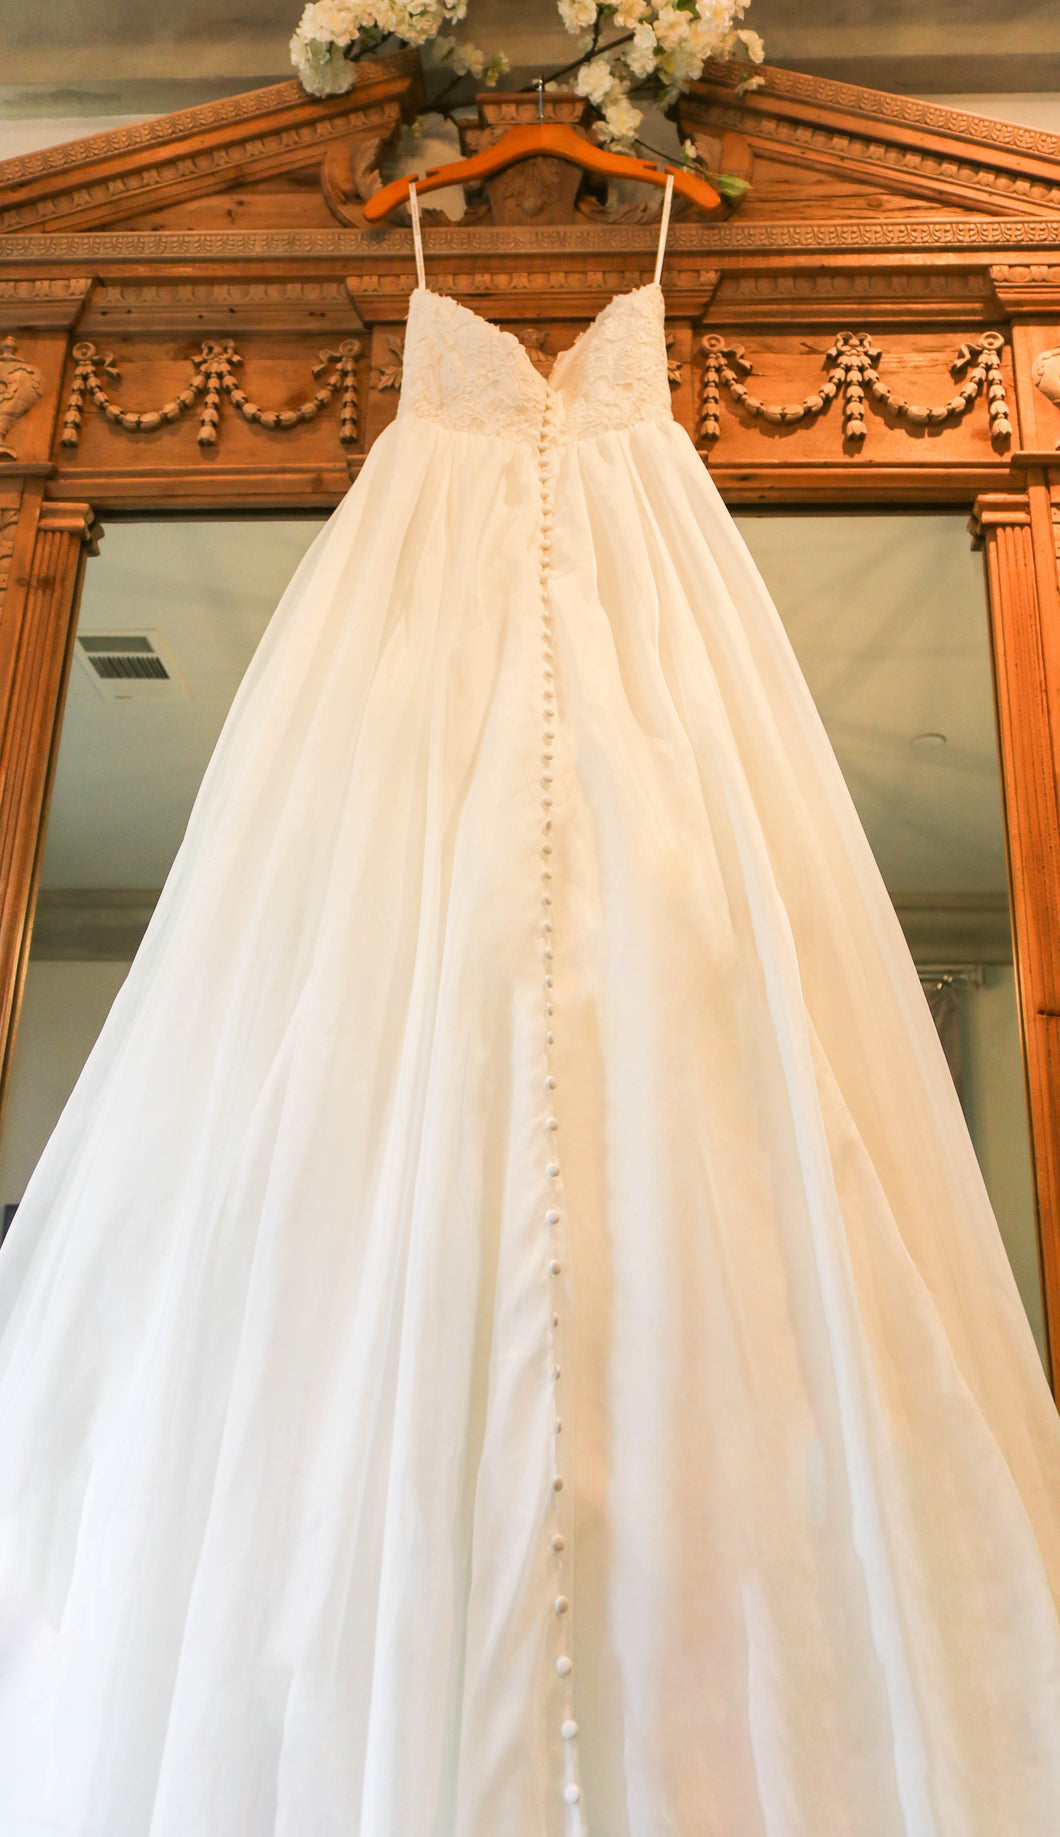 Essence of Australia '1702' size 6 new wedding dress front view on hanger